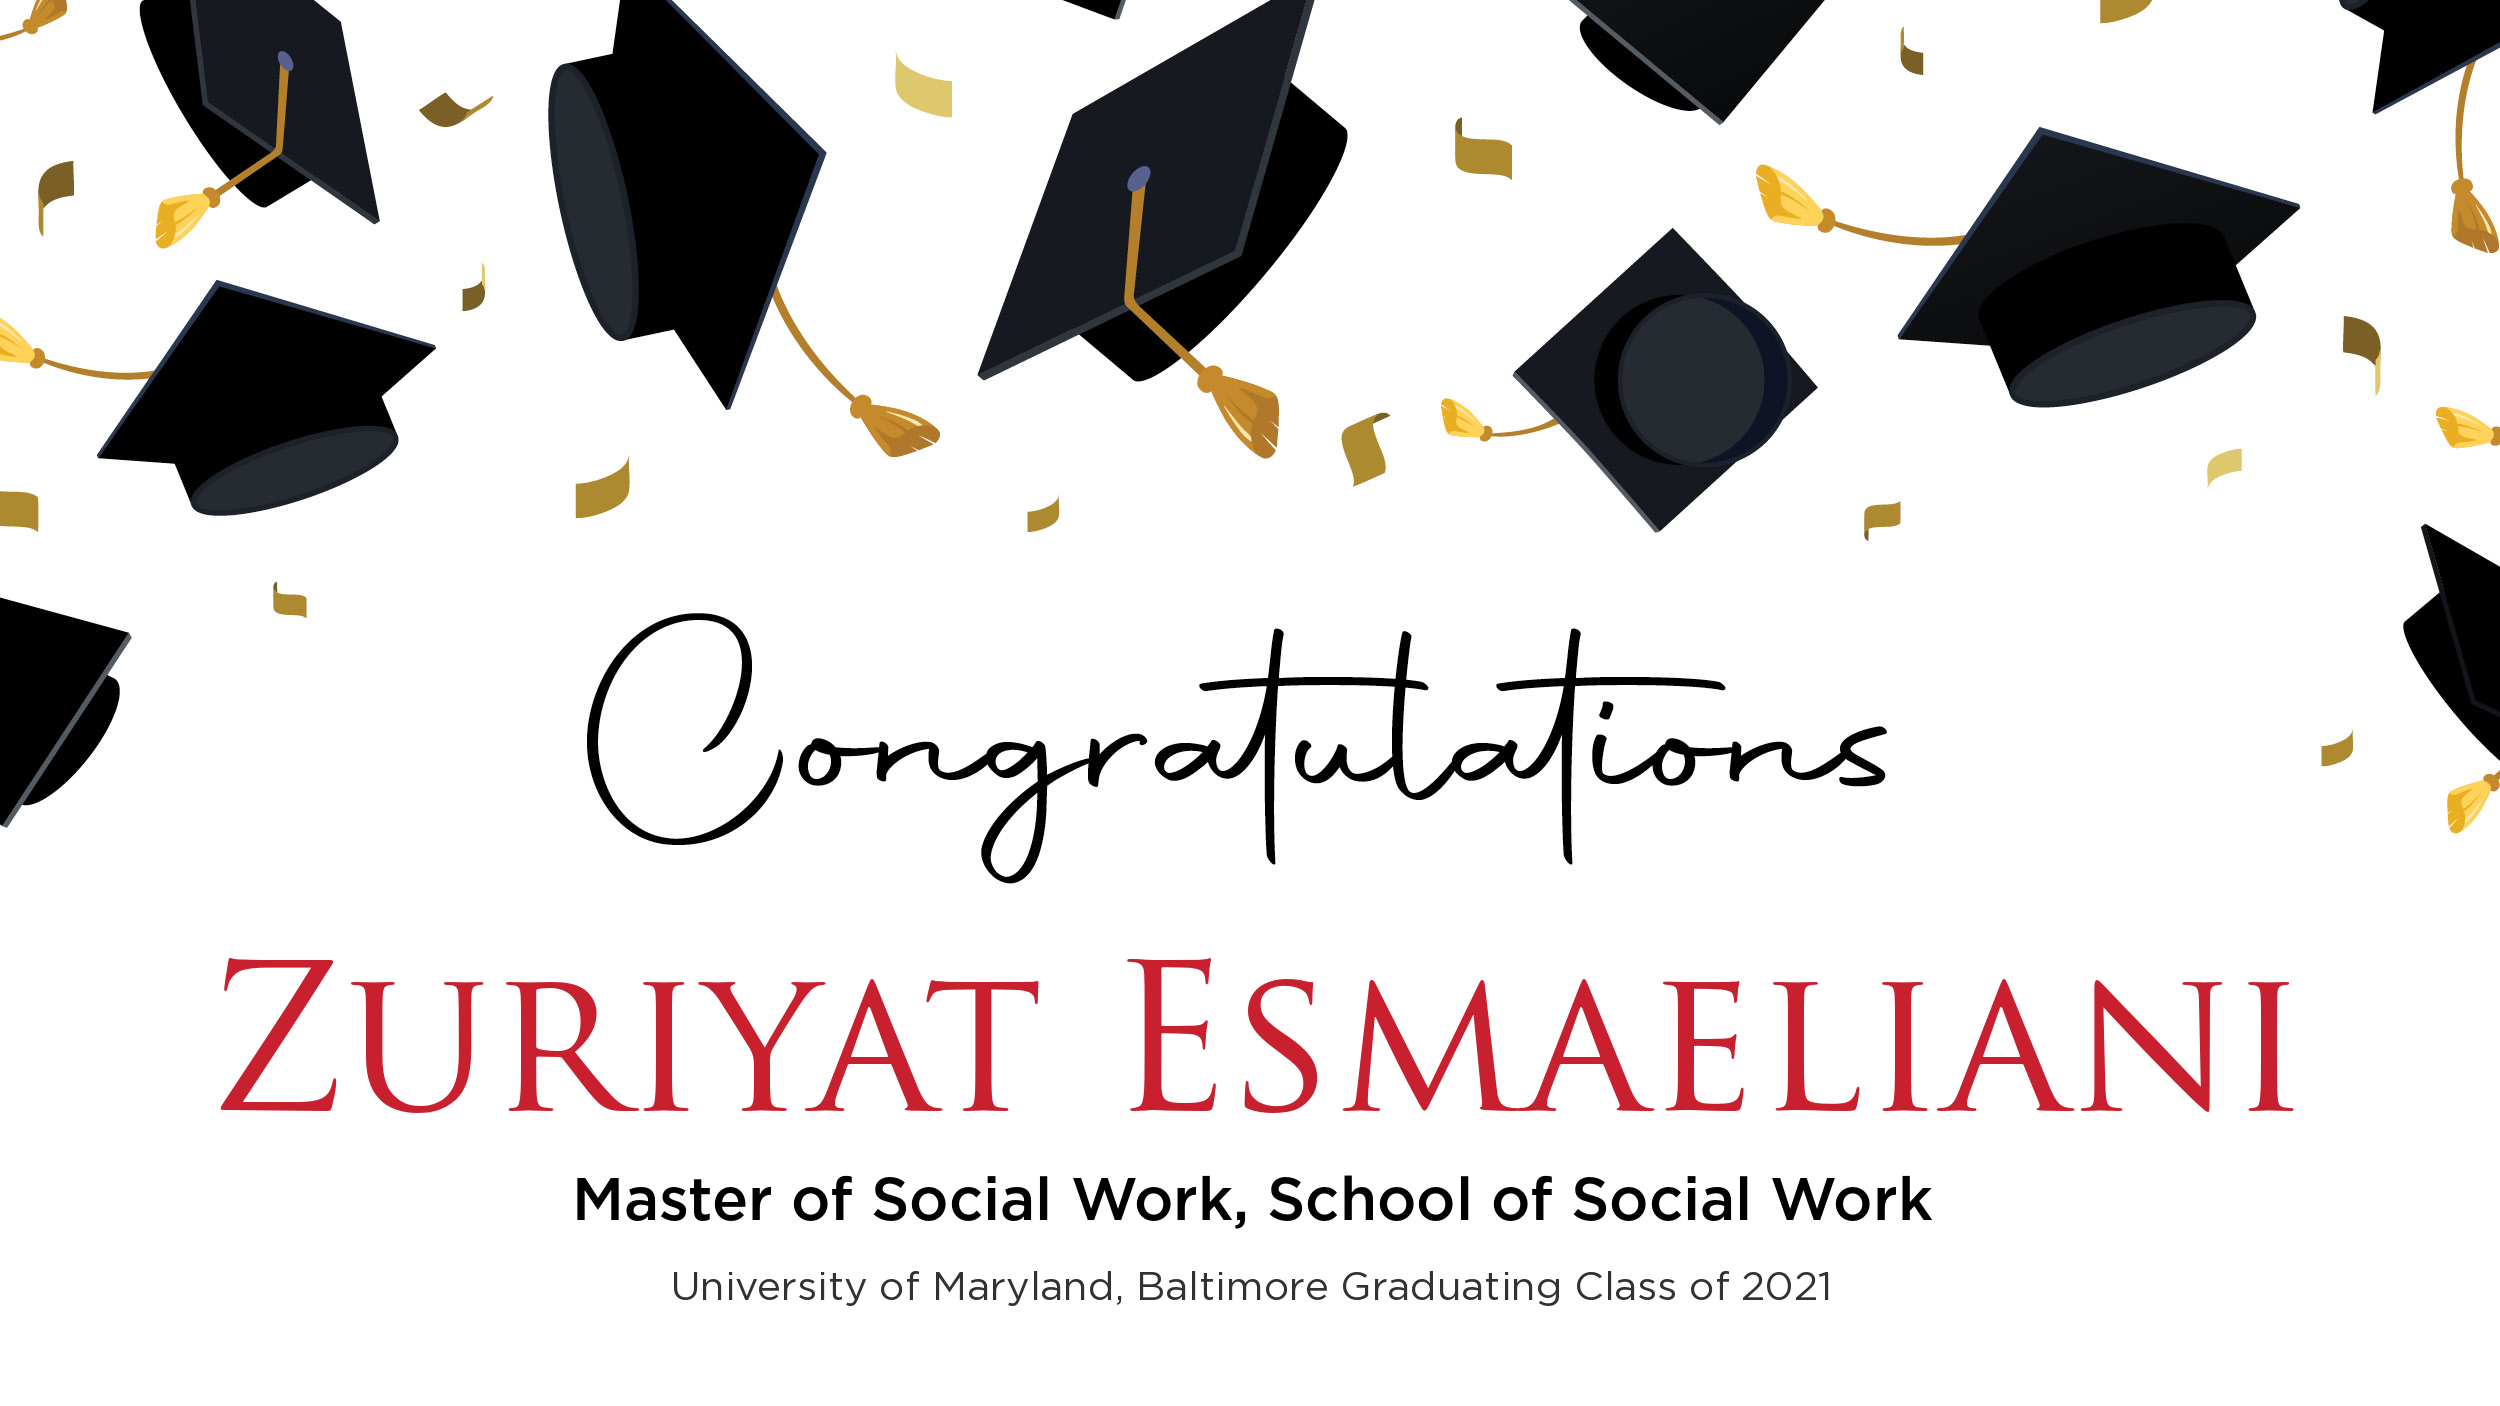 Congratulations Zuriyat Esmaeliani, Master of Social Work